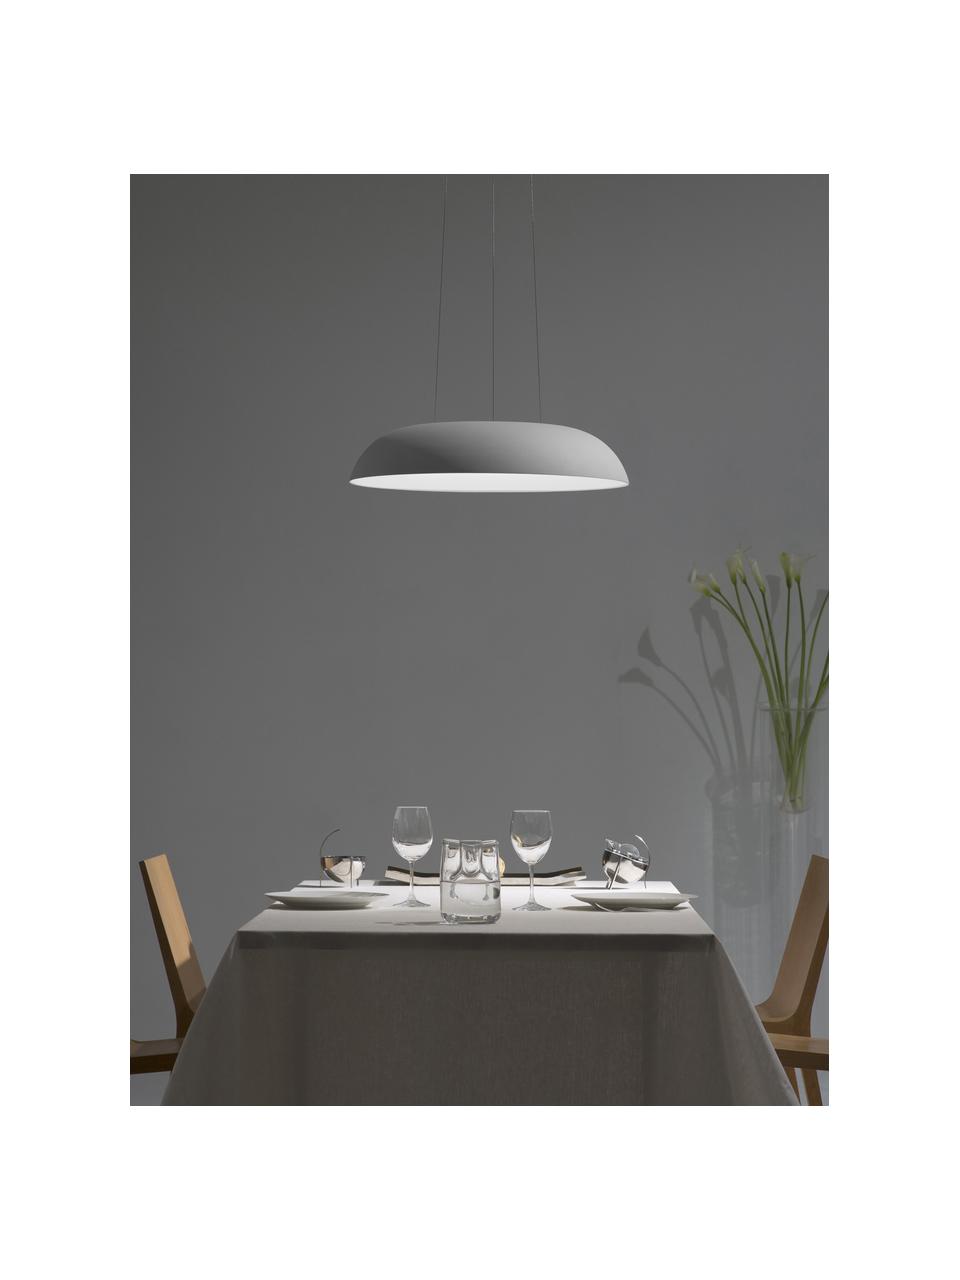 Große LED-Pendelleuchte Maggiolone, dimmbar, Lampenschirm: Aluminium, lackiert, Weiß, Ø 60 x H 12 cm